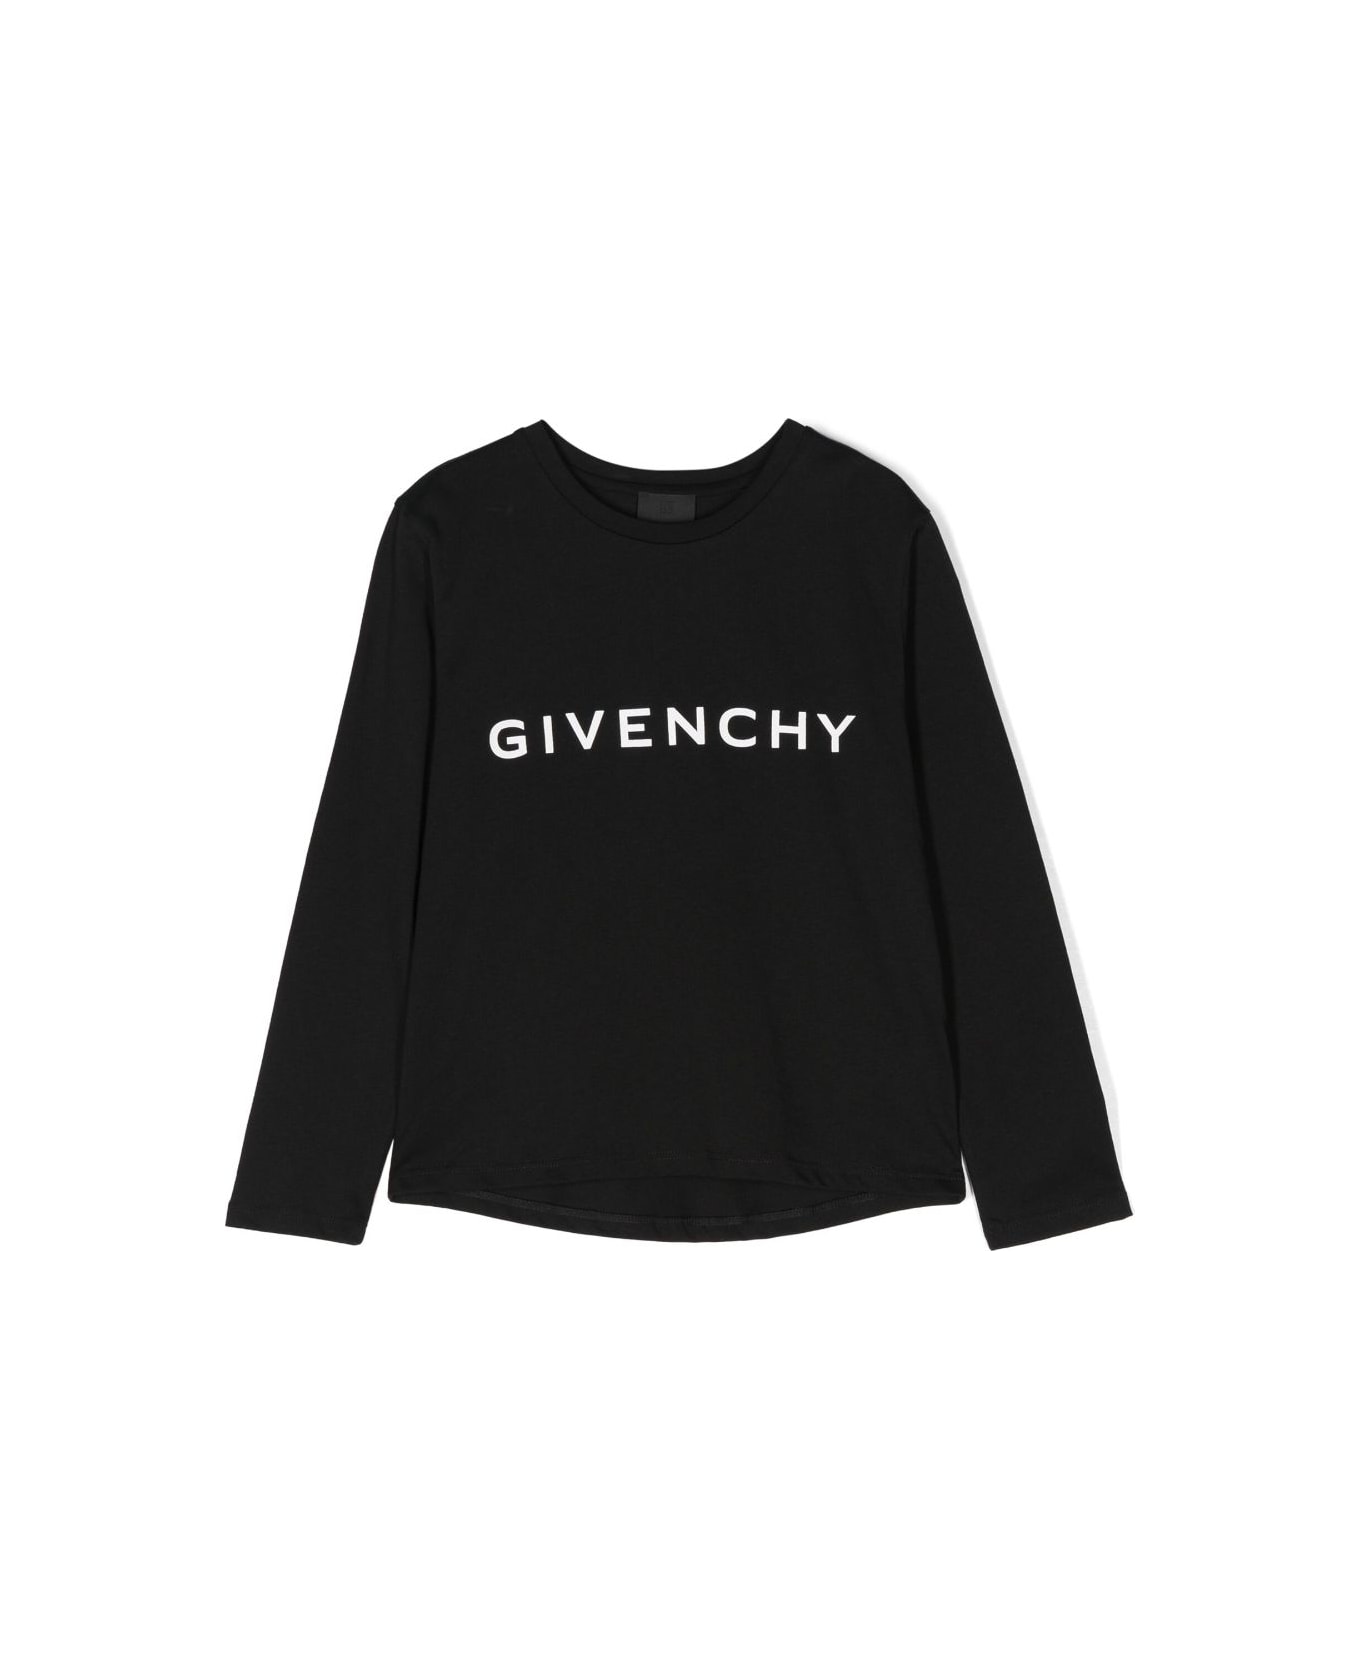 Givenchy T-shirt Nera In Jersey Di Cotone Bambino - Nero